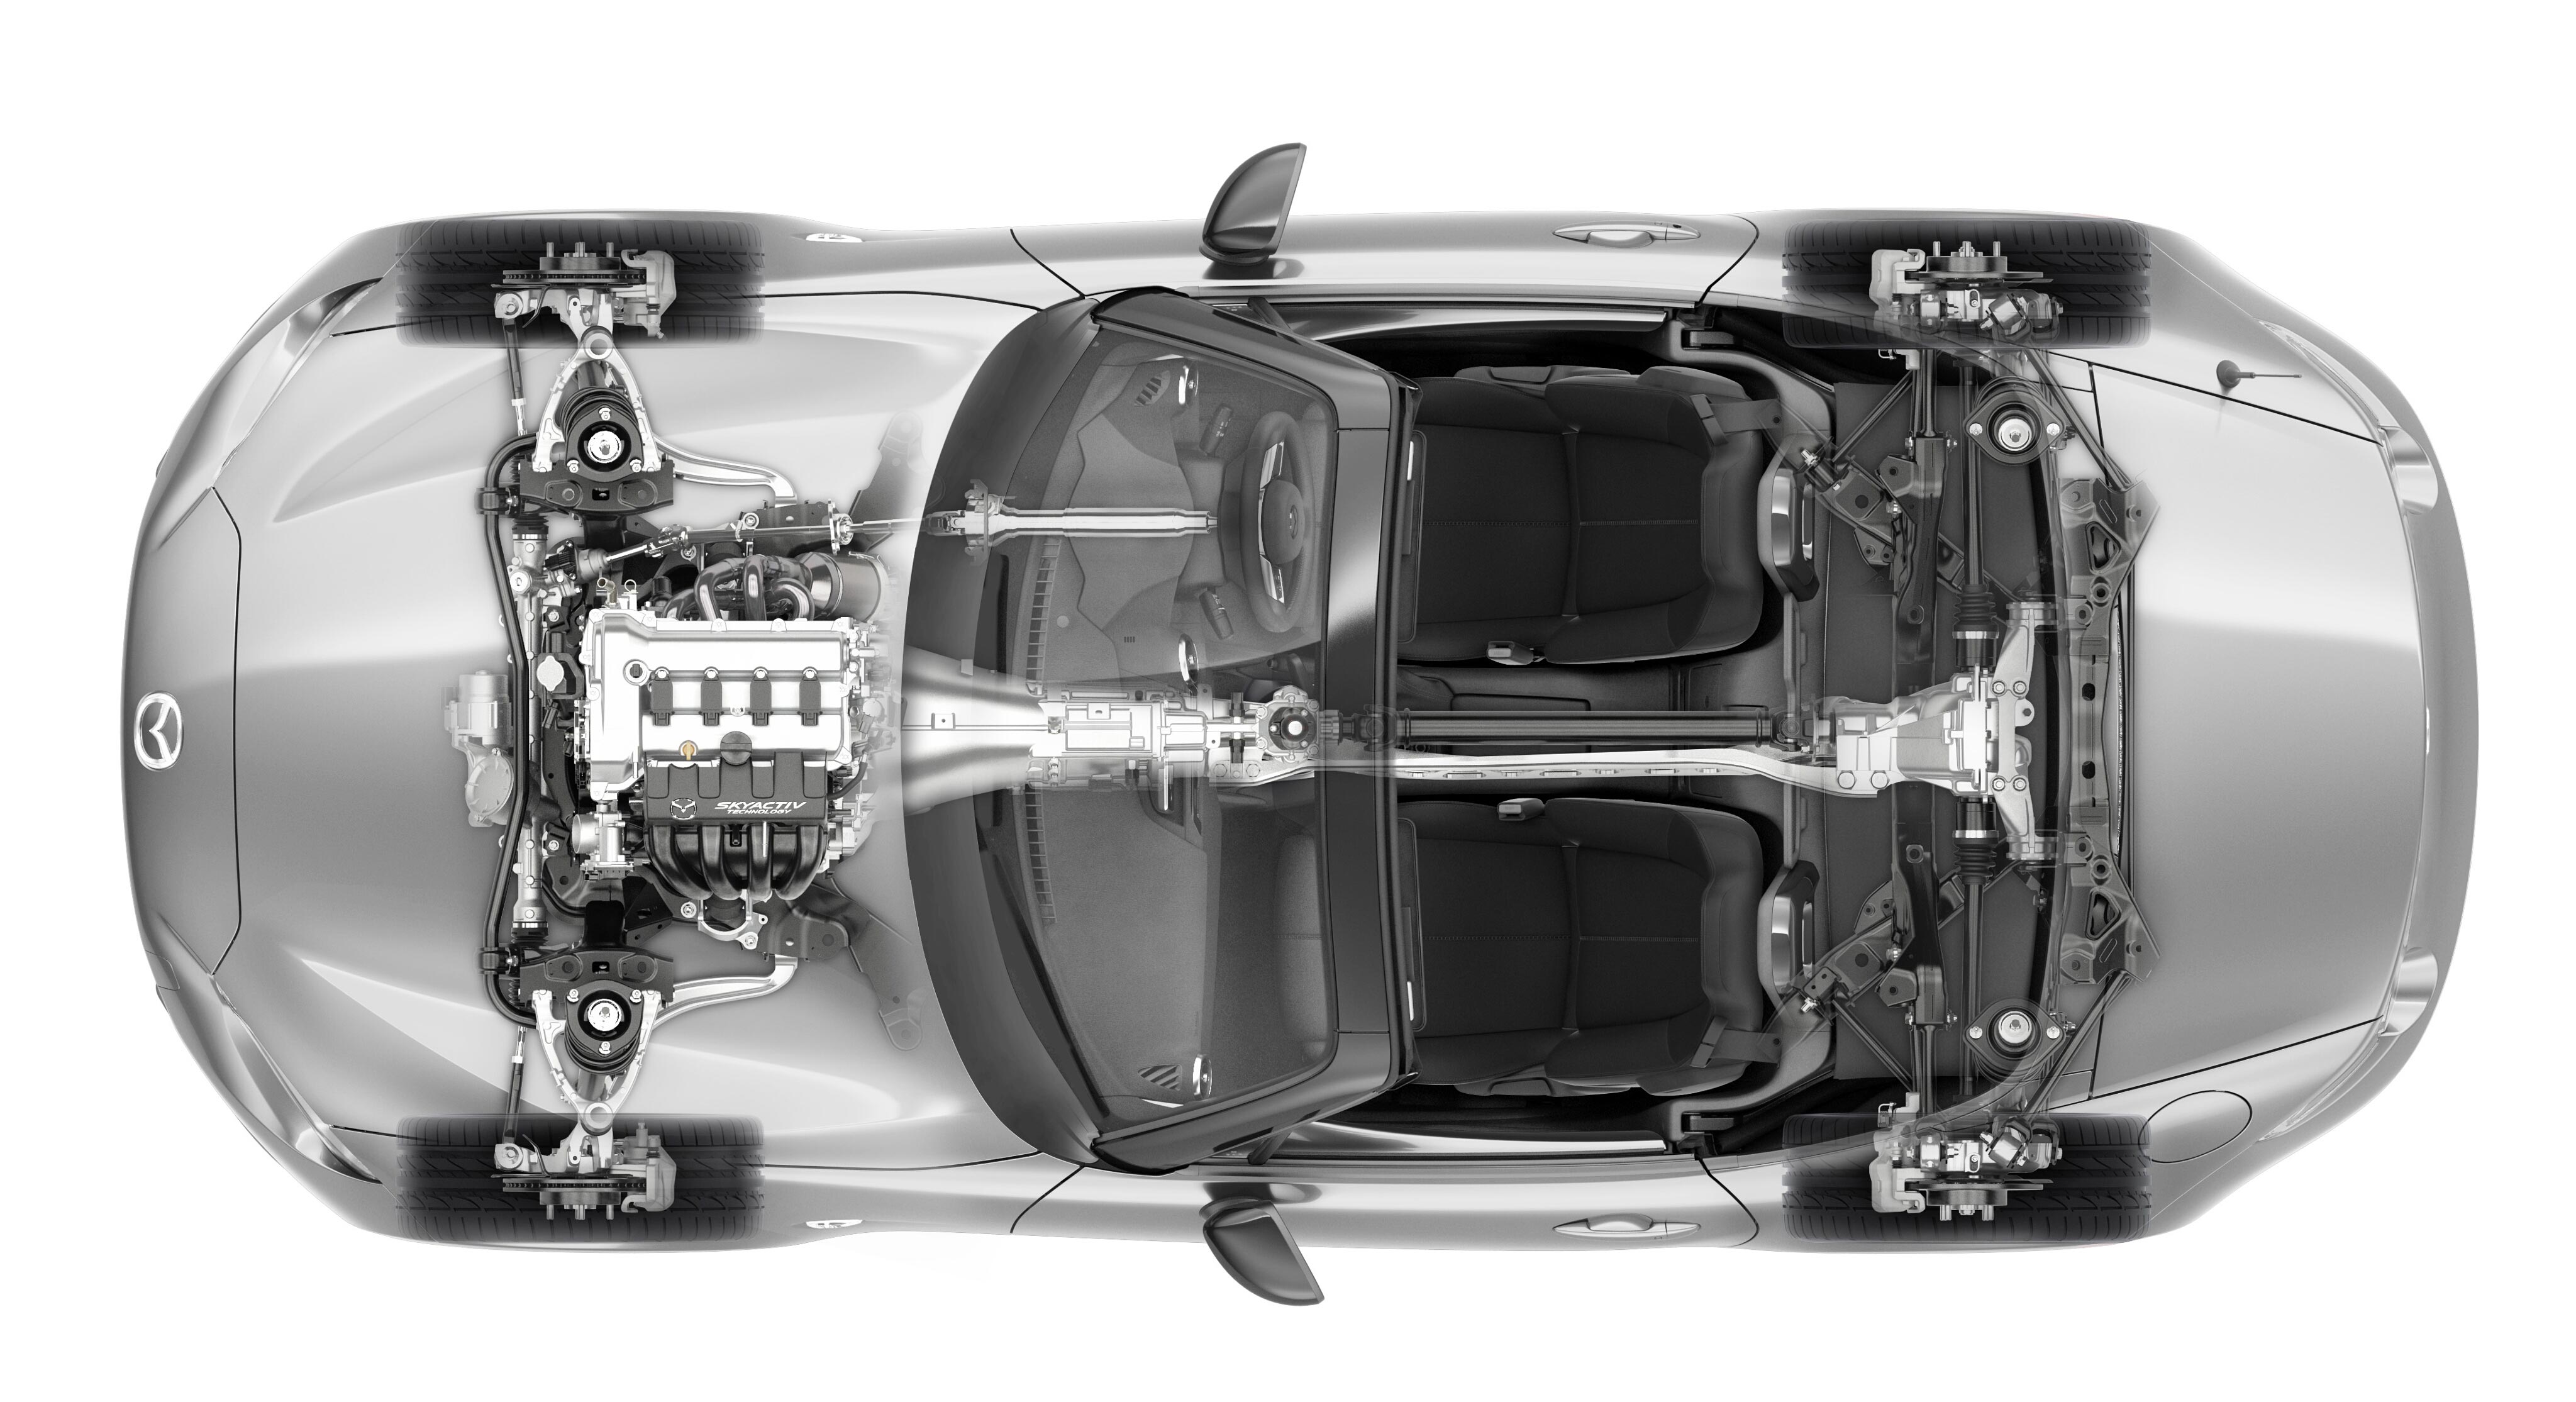 Mazda Roadster cutaway drawing